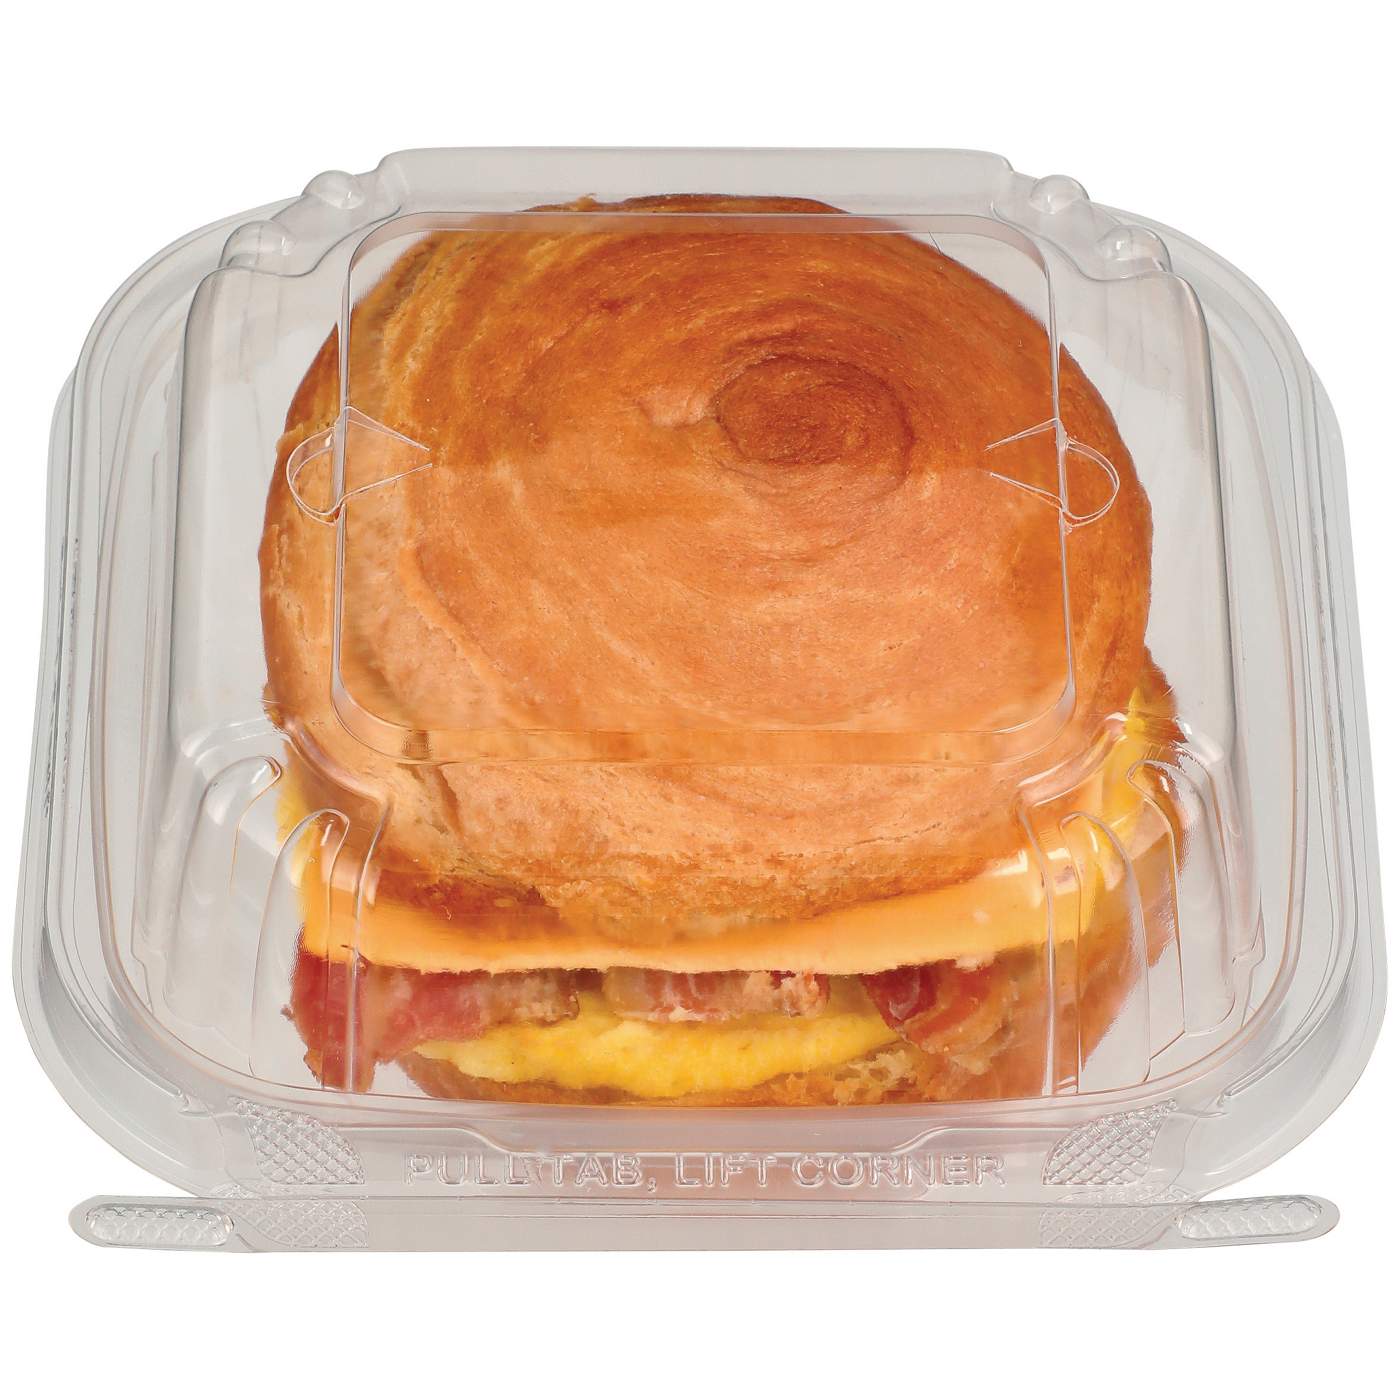 H-E-B Bakery Croissant Breakfast Sandwich - Bacon Egg & Cheese; image 1 of 4